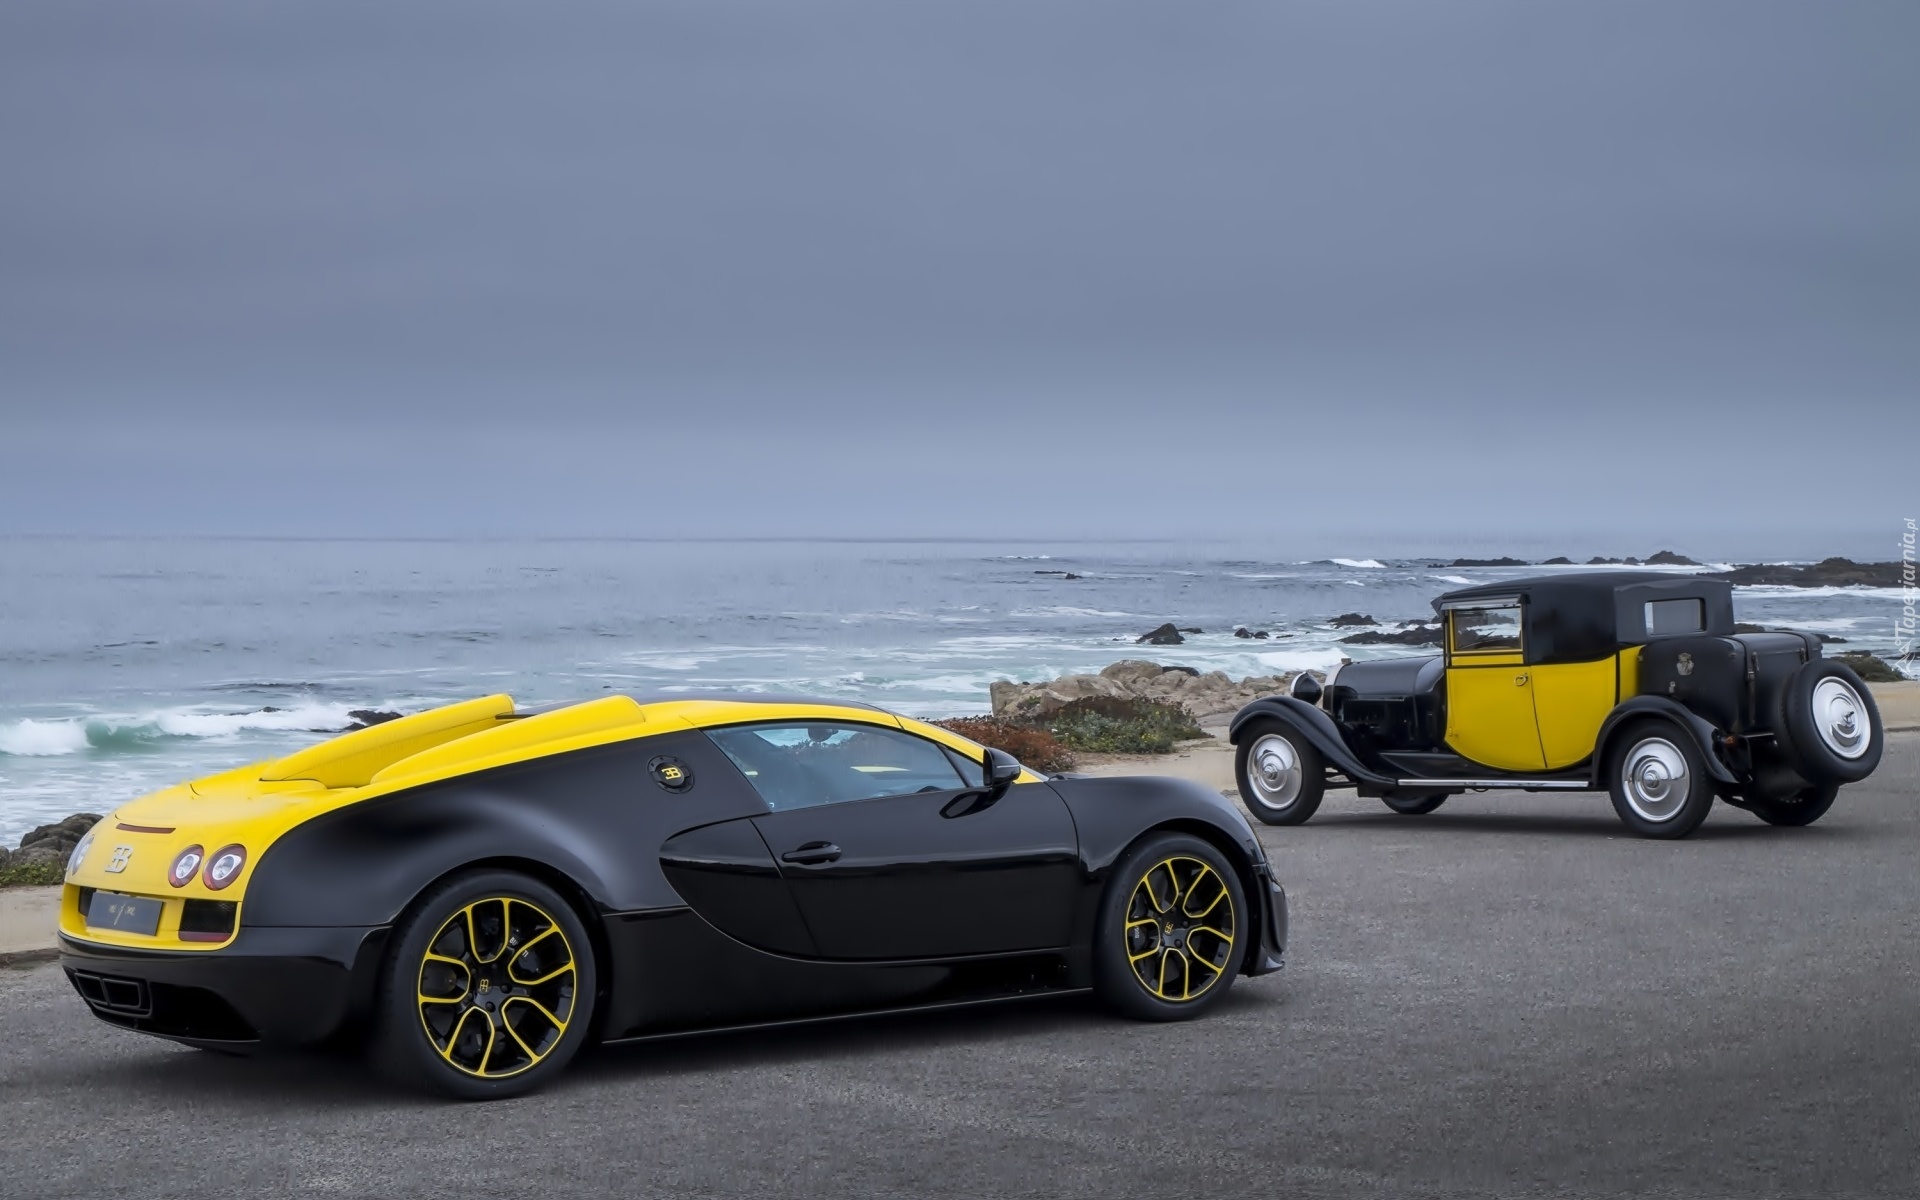 Samochody, Bugatti Veyron, Morze